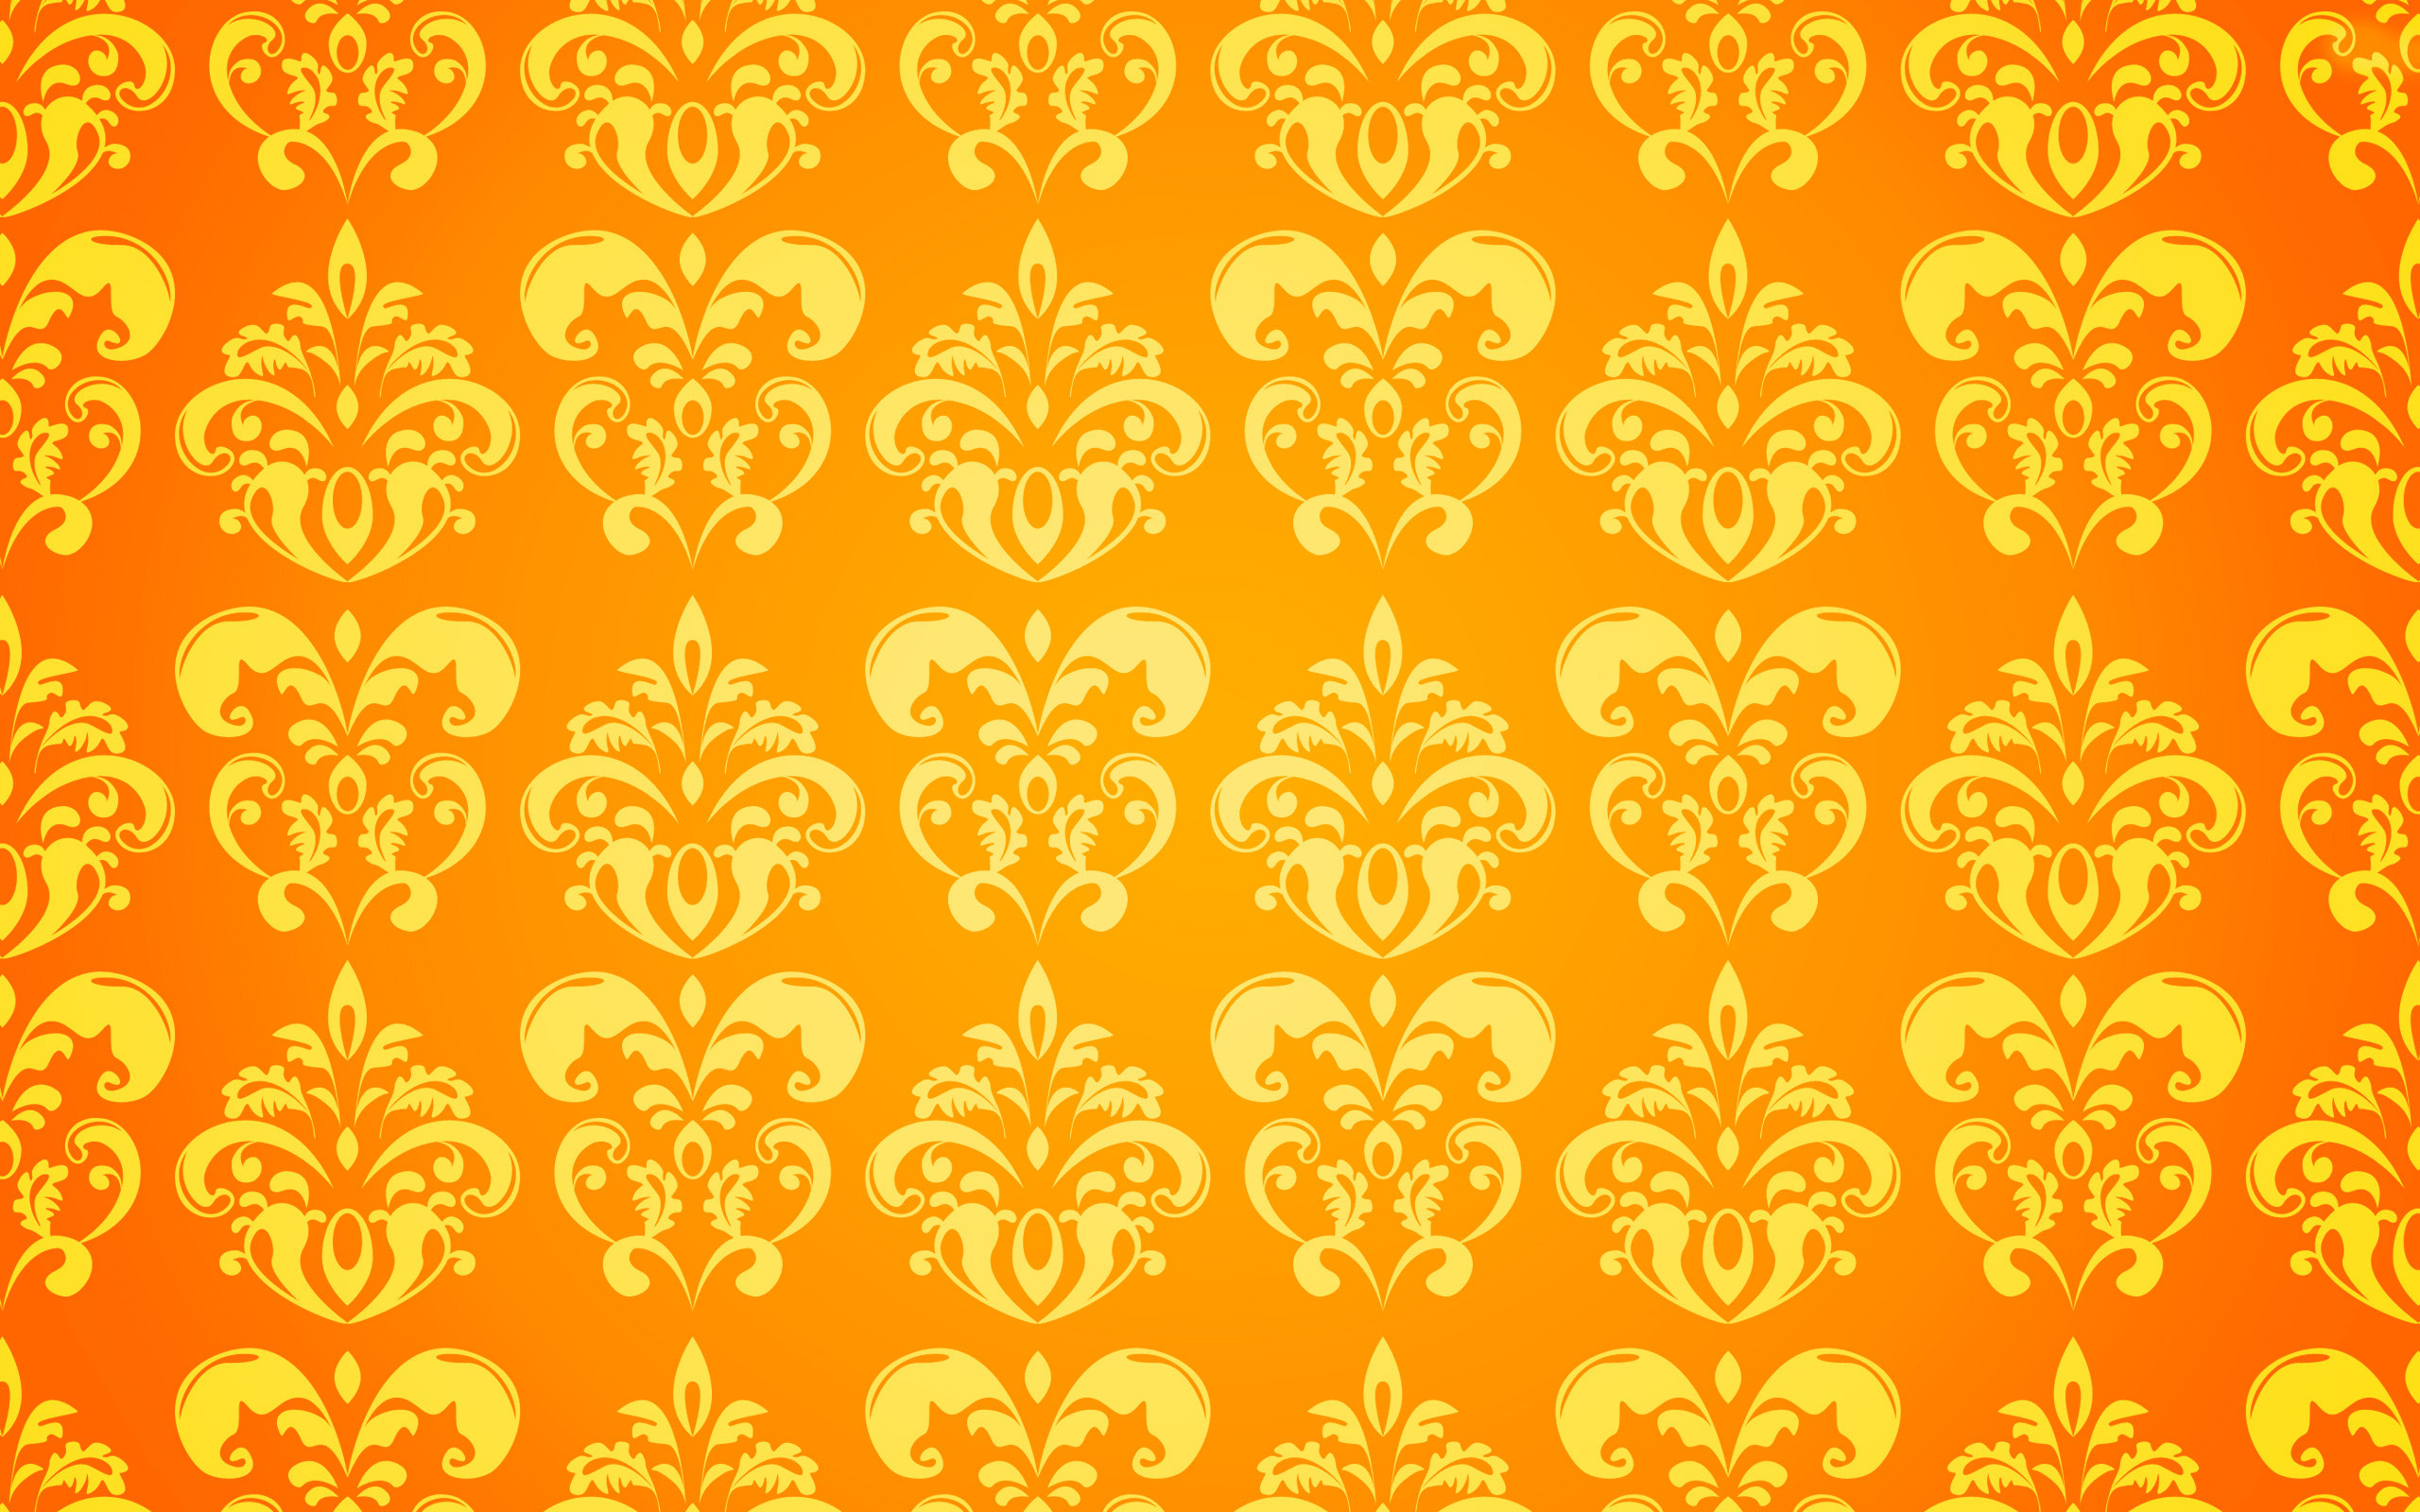 Wallpaper Pattern Vintage In Orange Floral Image | HD Wallpapers ...